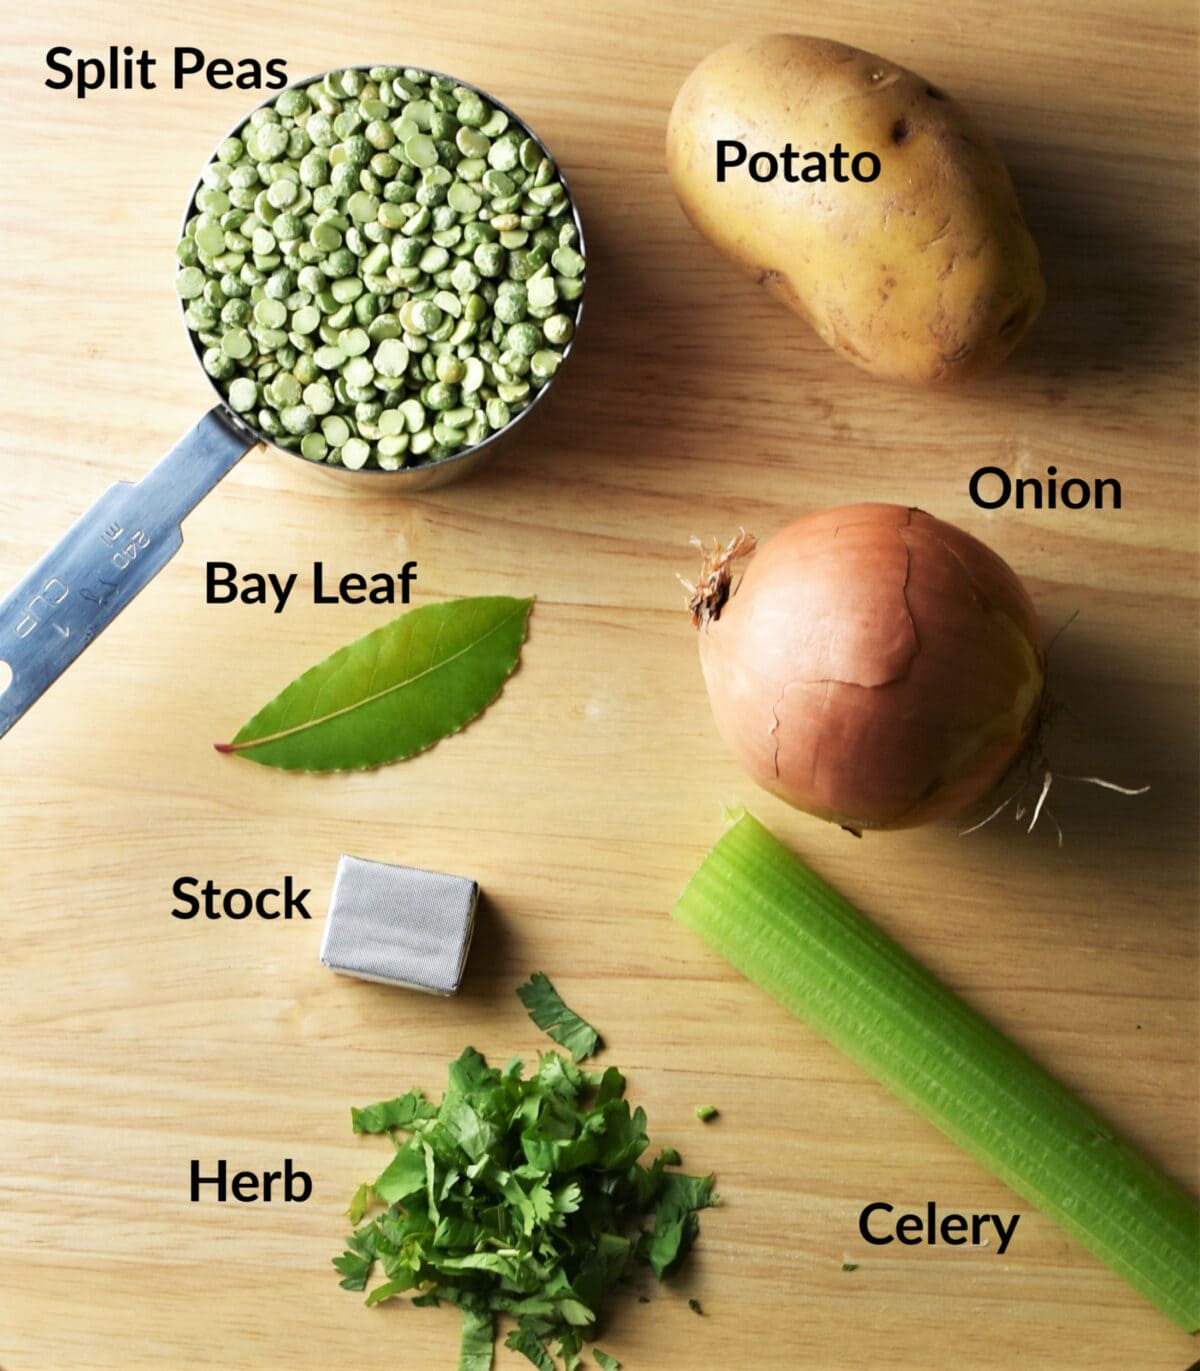 Split green peas, bay leaf, stock cube, chopped herbs, celery, onion and potato.